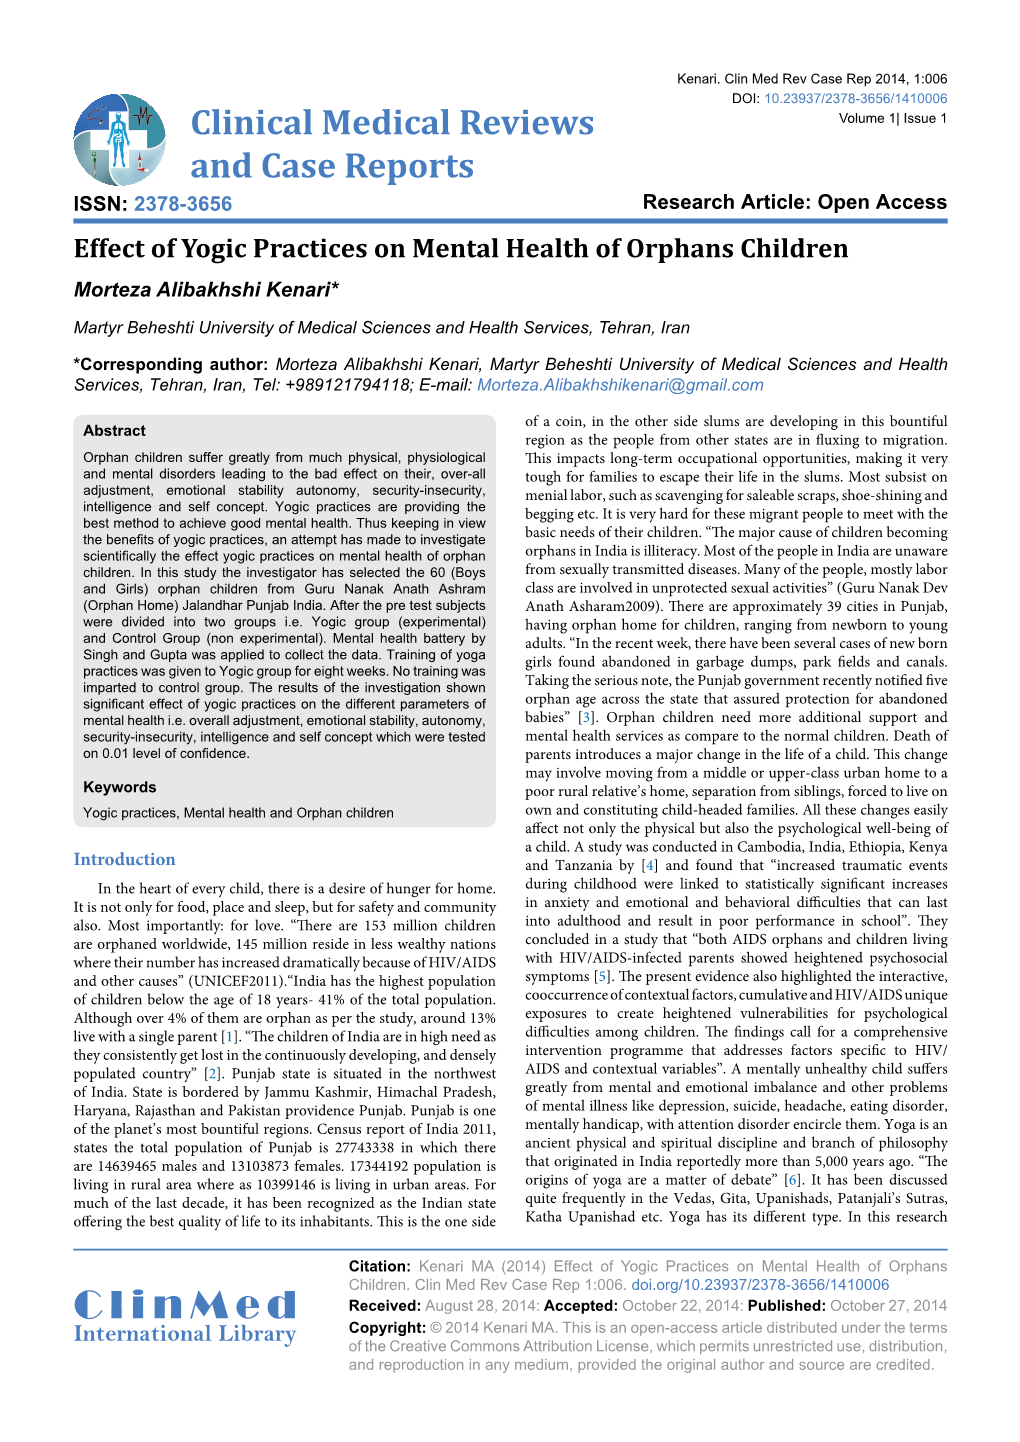 Effect of Yogic Practices on Mental Health of Orphanschildren